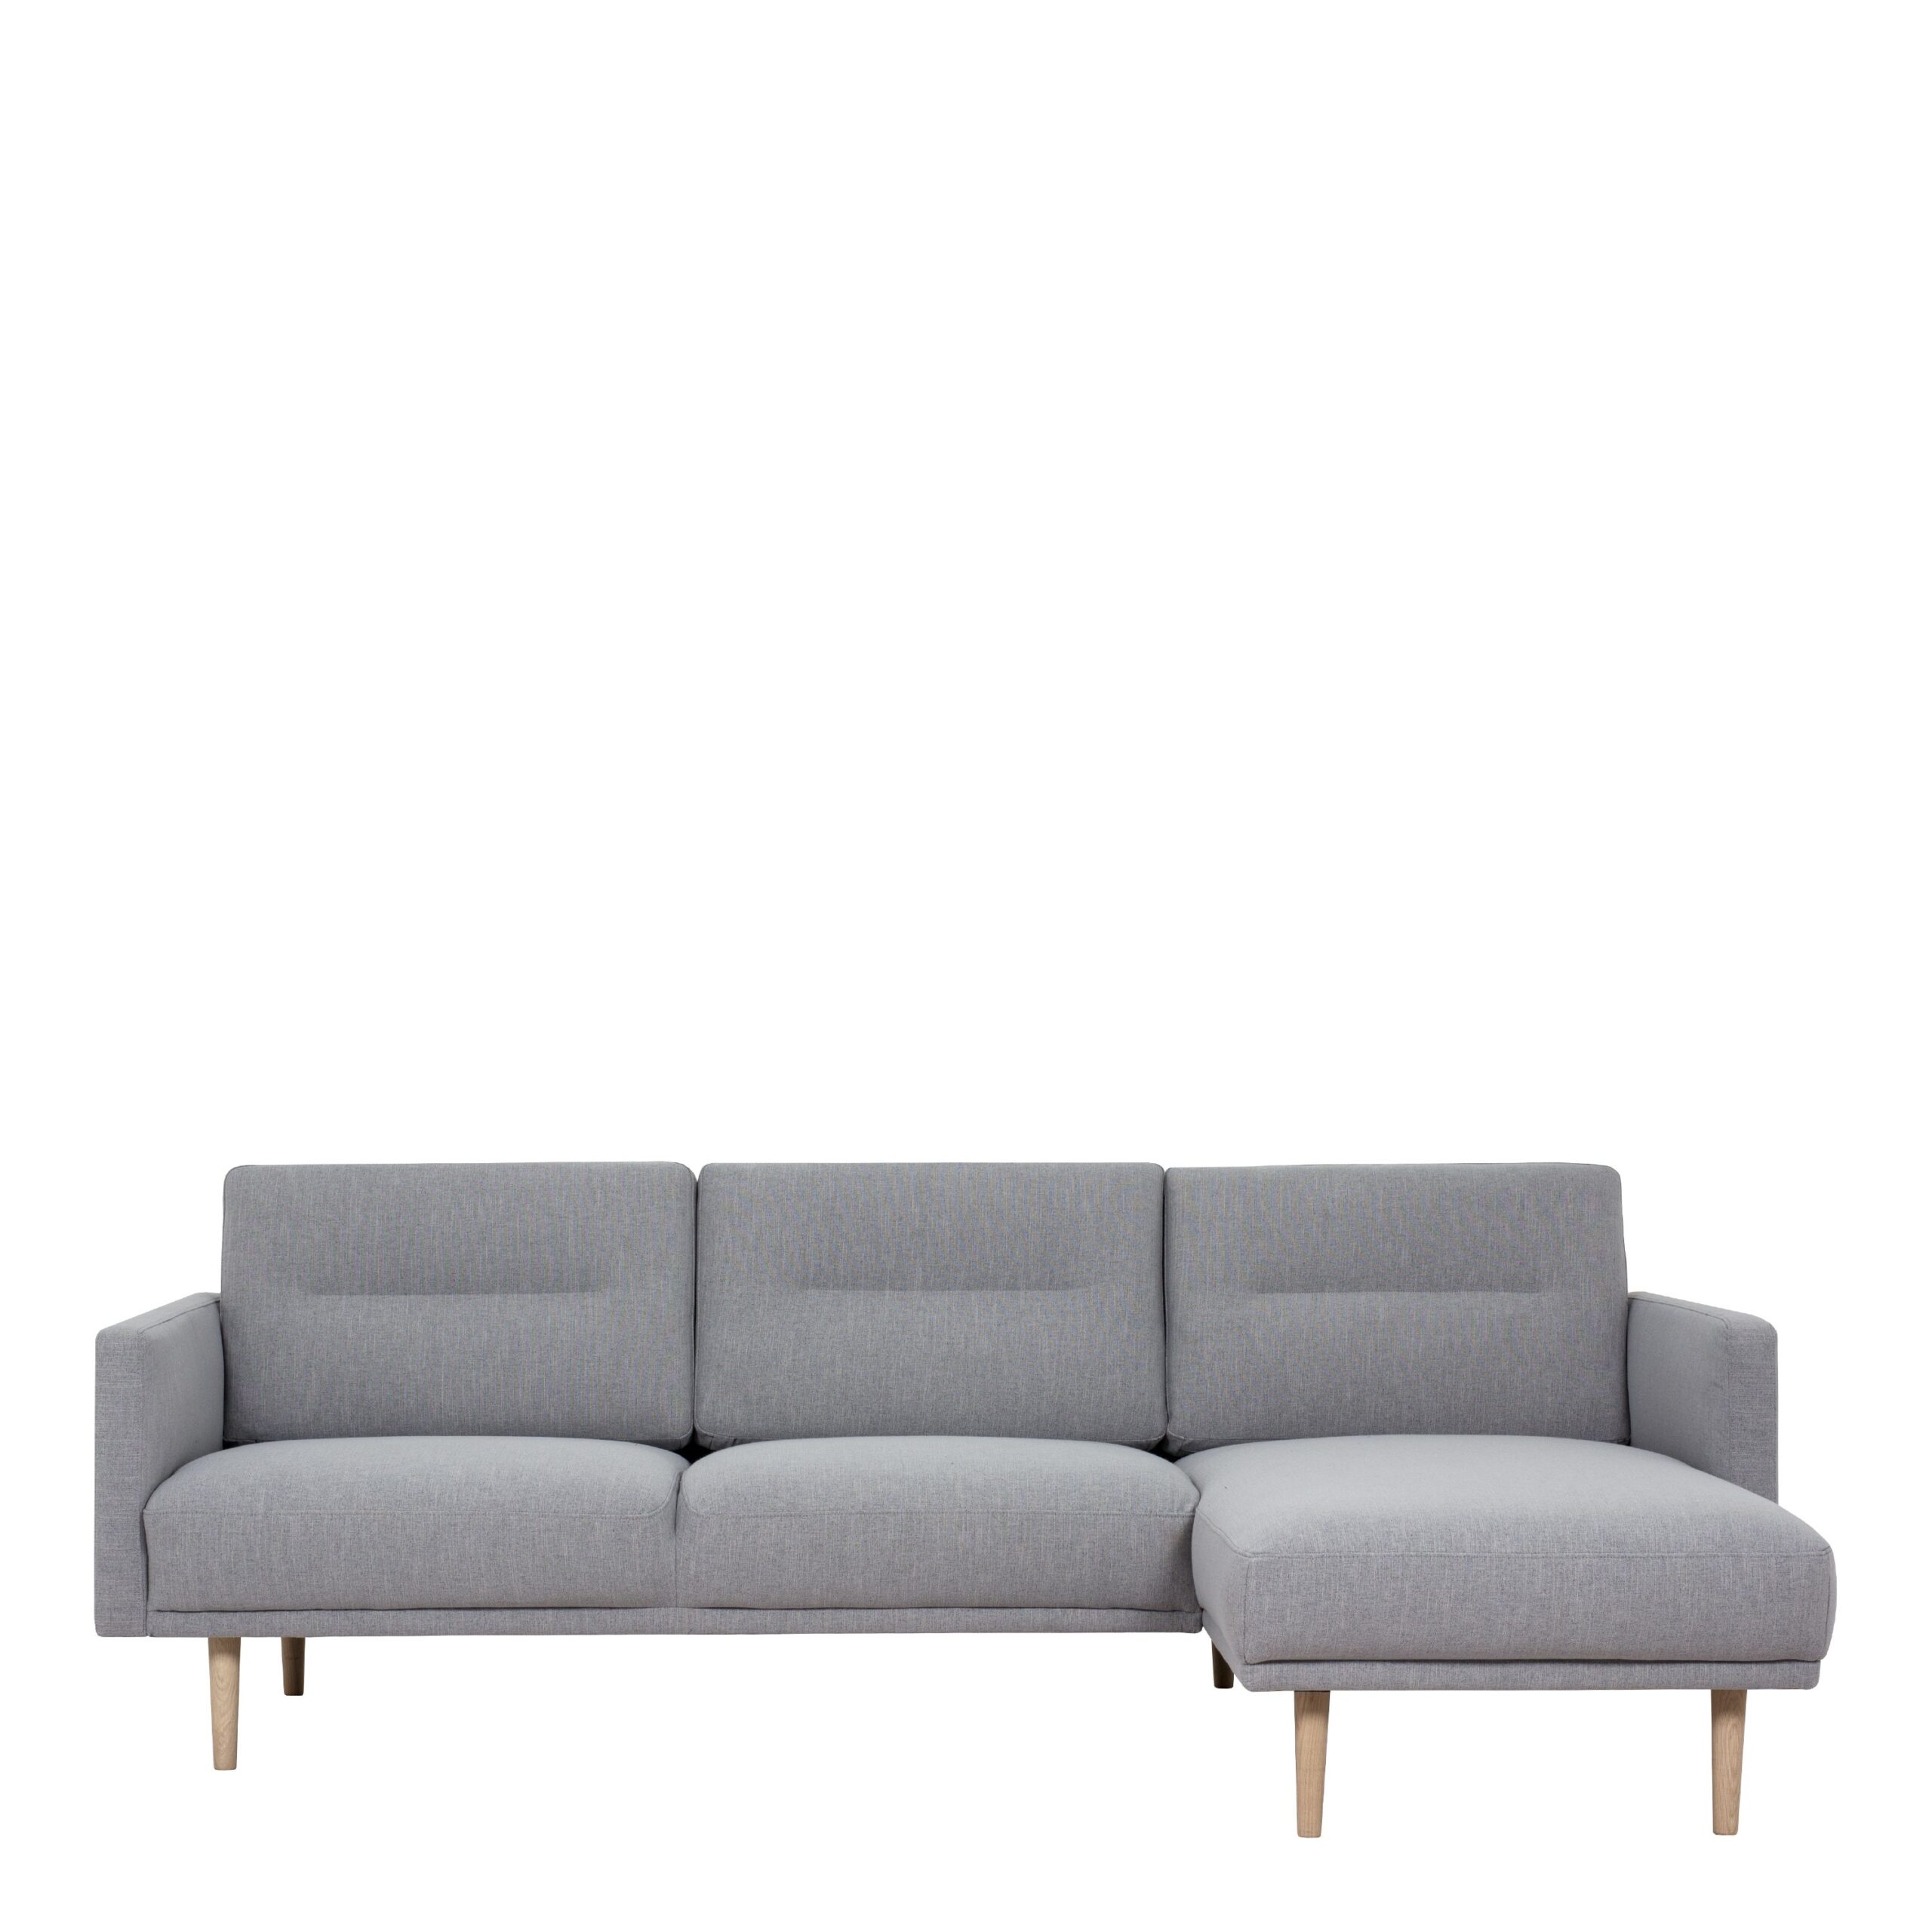 Vickie Chaiselongue Sofa (Rh) - Grey Oak Legs